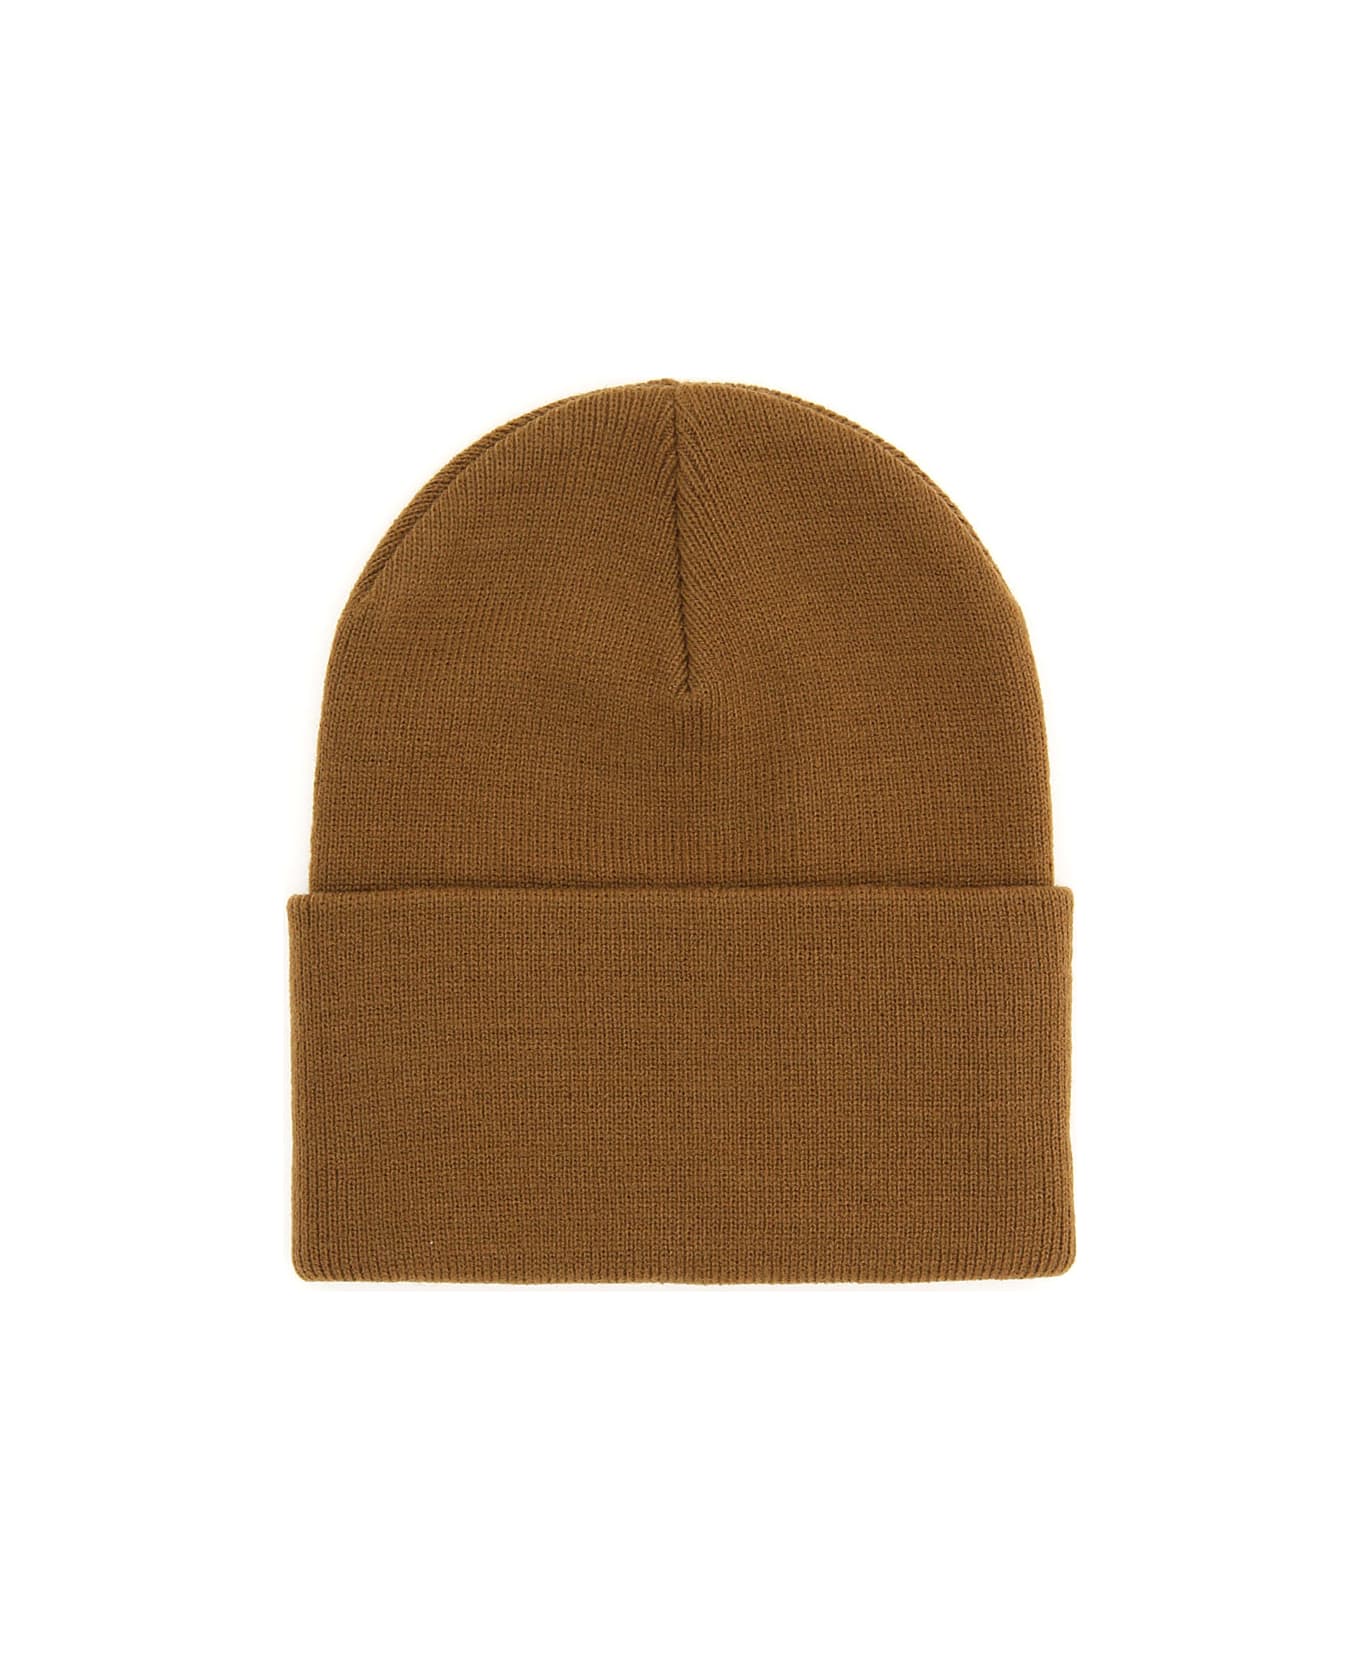 Carhartt Beanie Hat With Logo Patch - Marrone 帽子